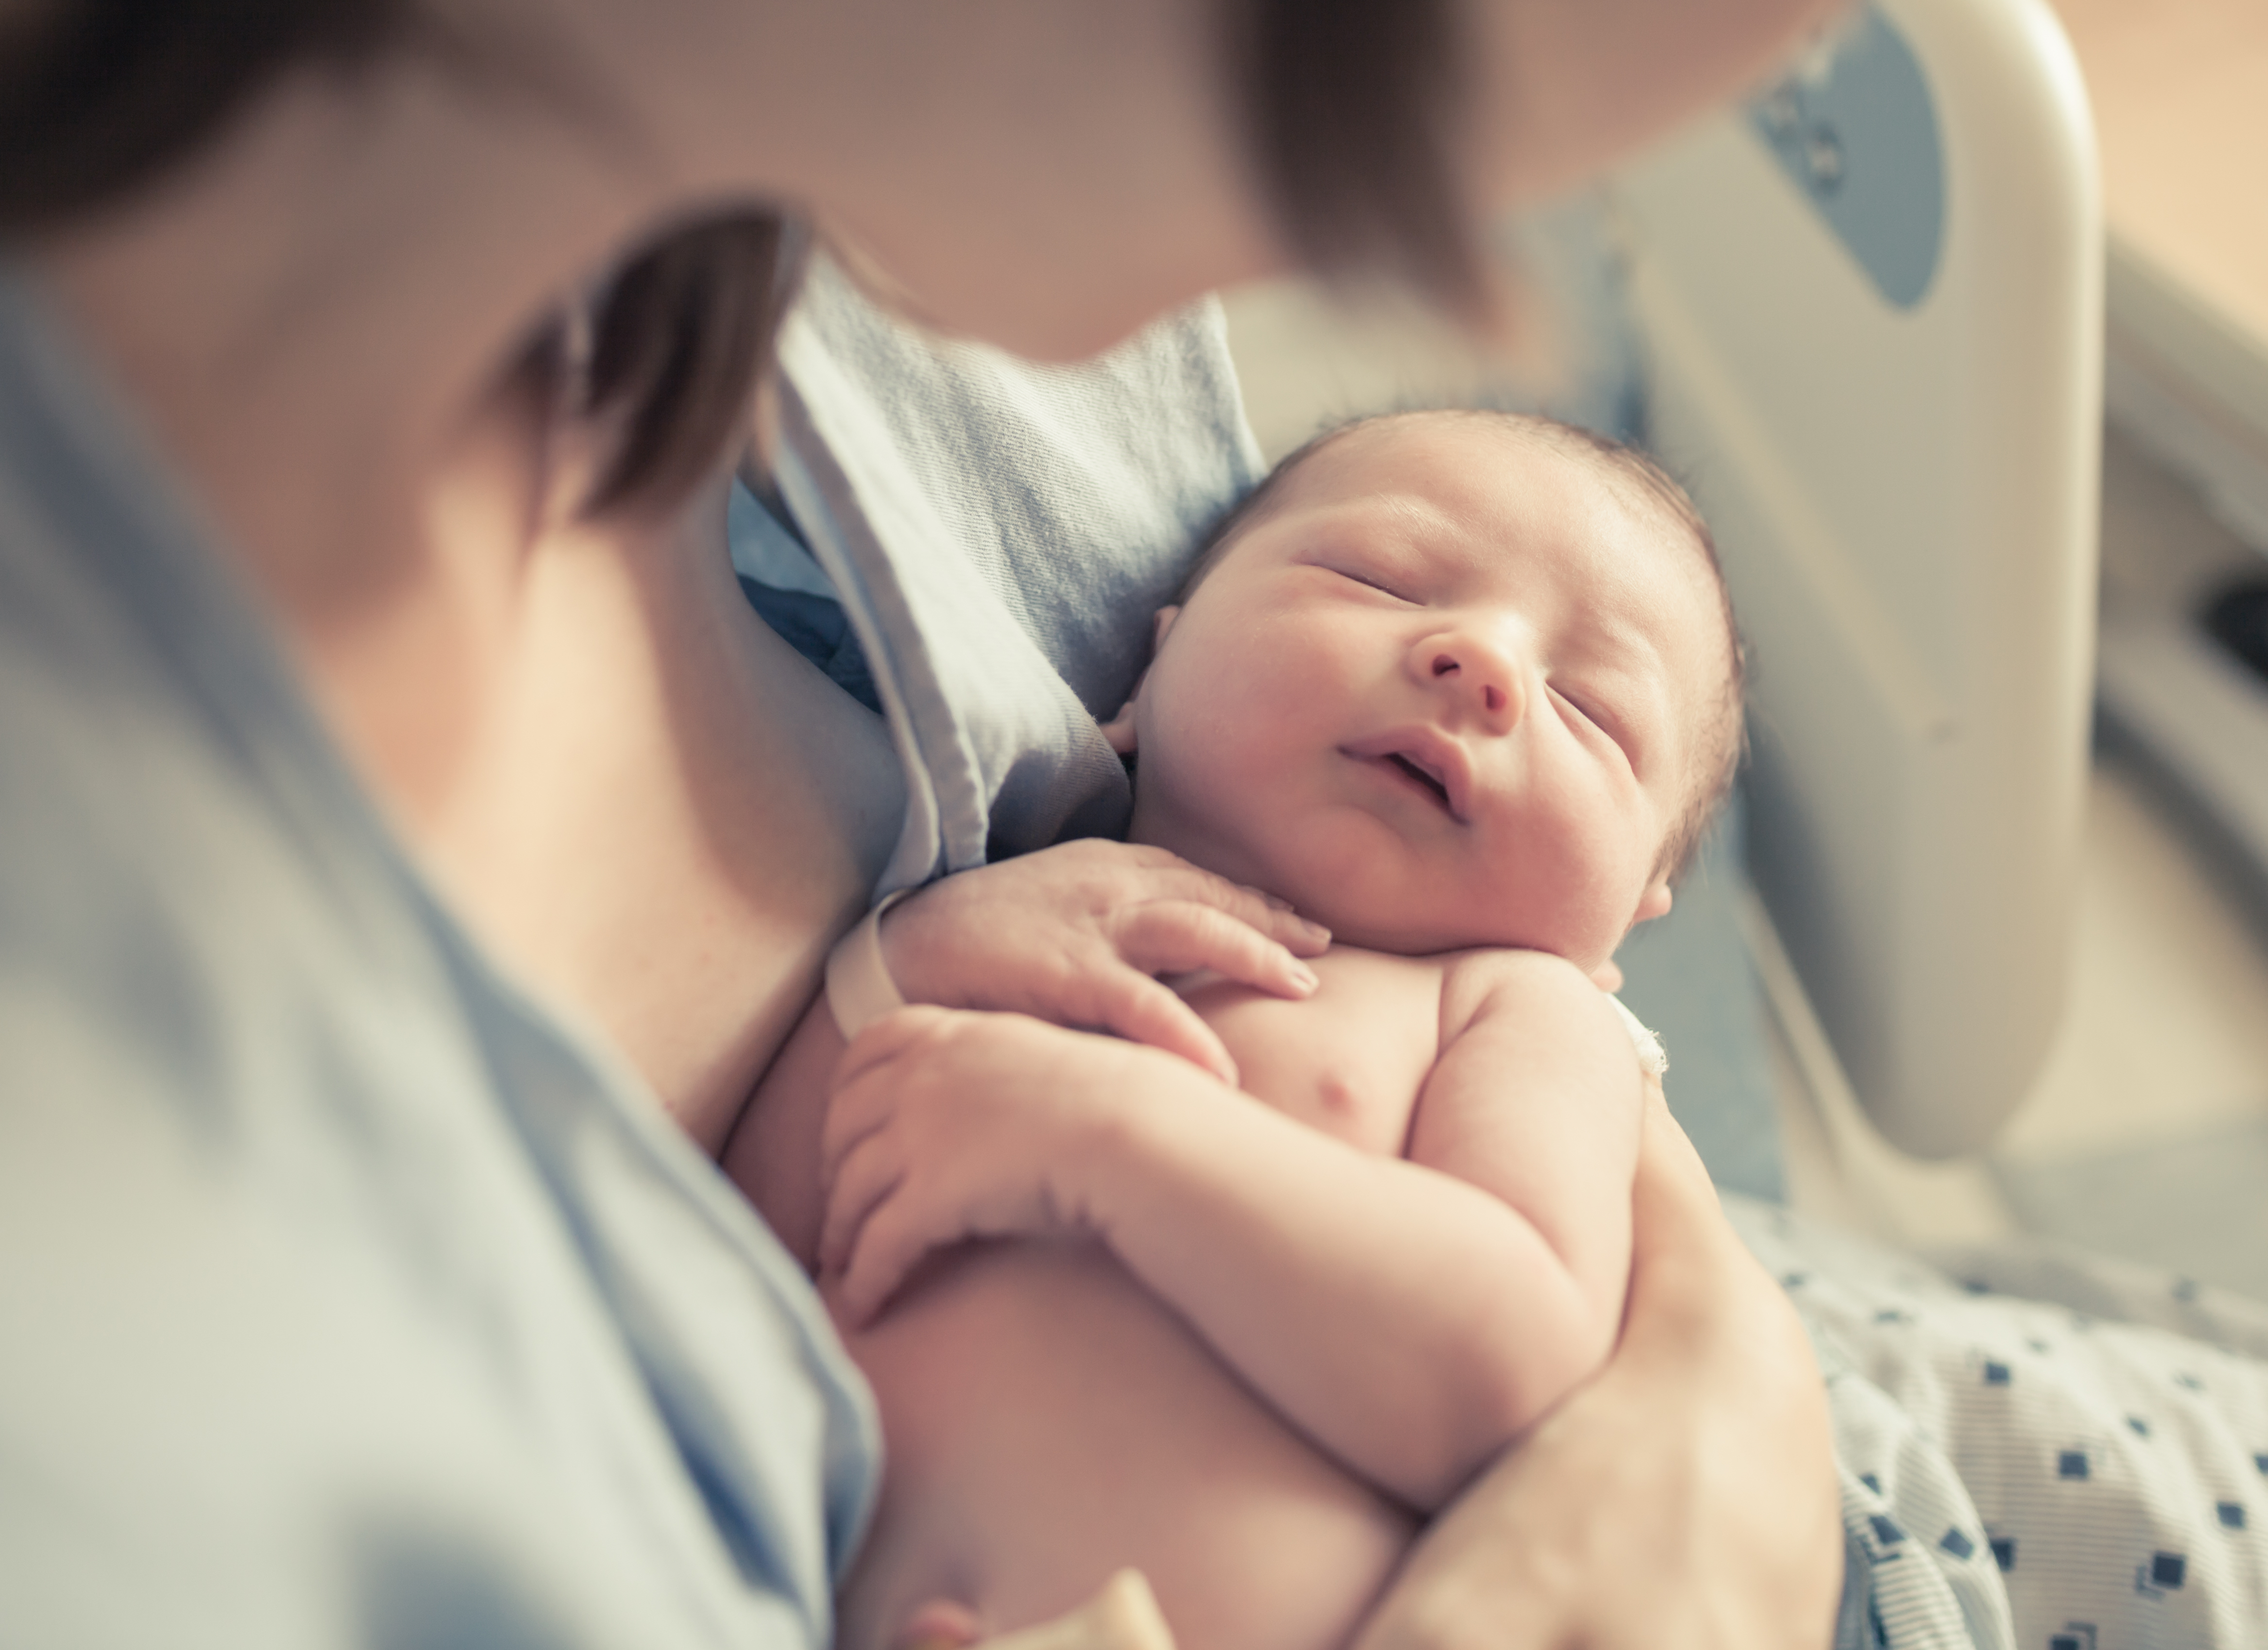 A mother holding her newborn baby | Source: Shutterstock